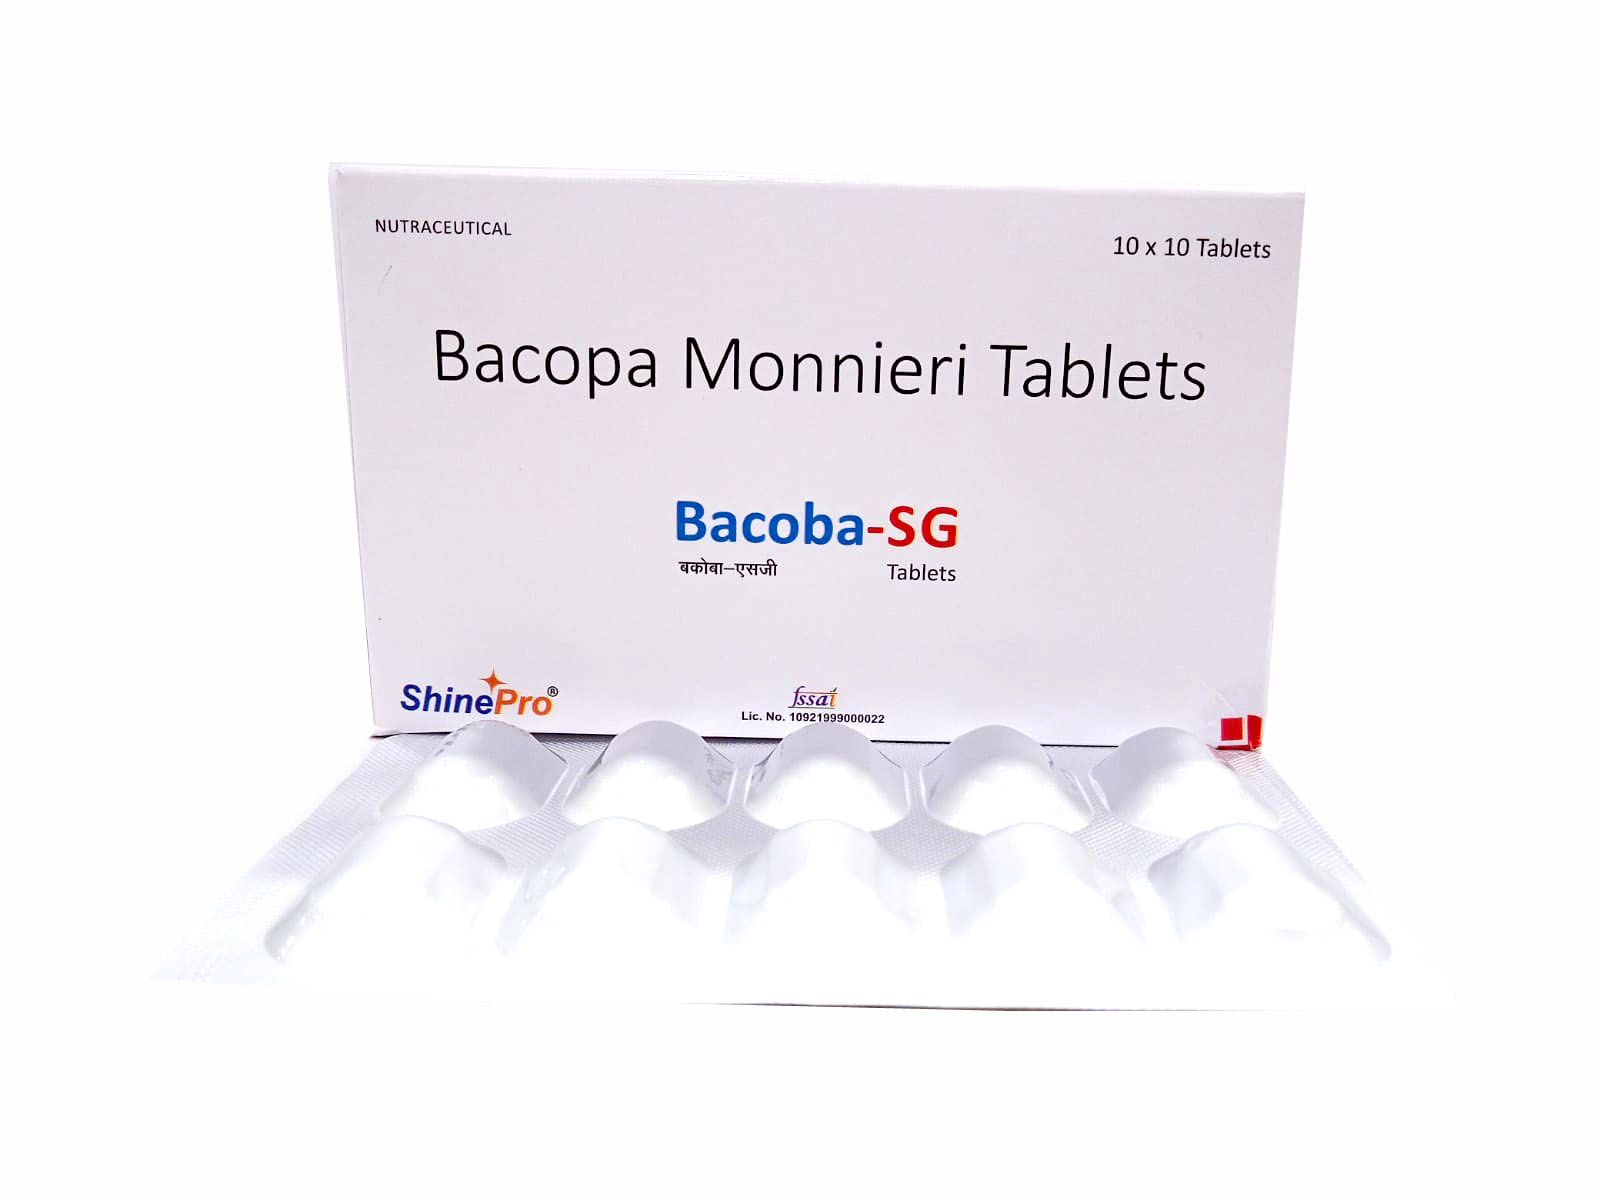 Bacopa Monnieri tablets